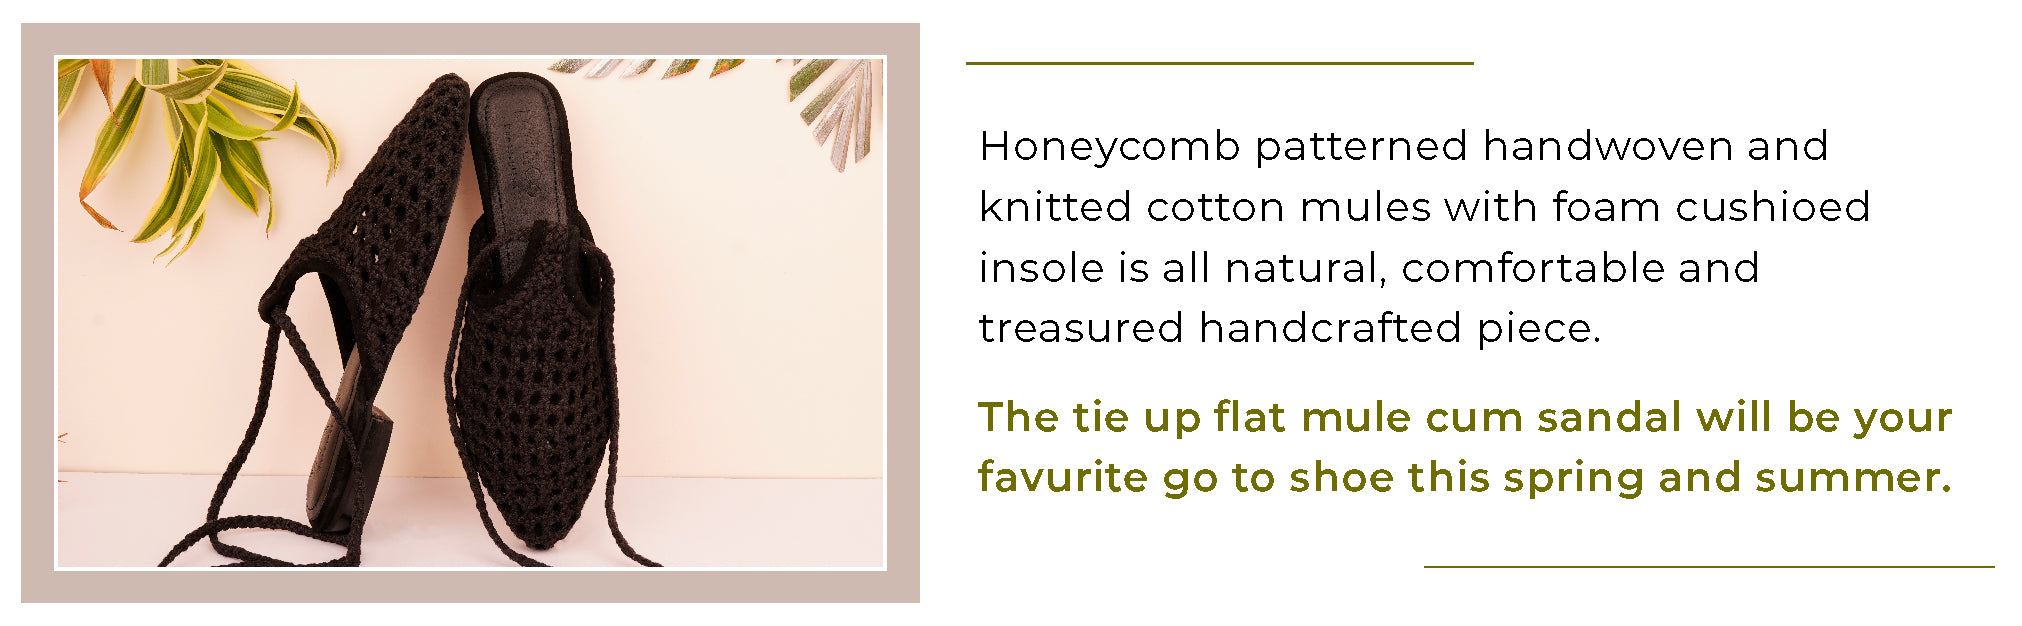 TUTSI Nude Handwoven Honeycomb Tie Up Flat Mules